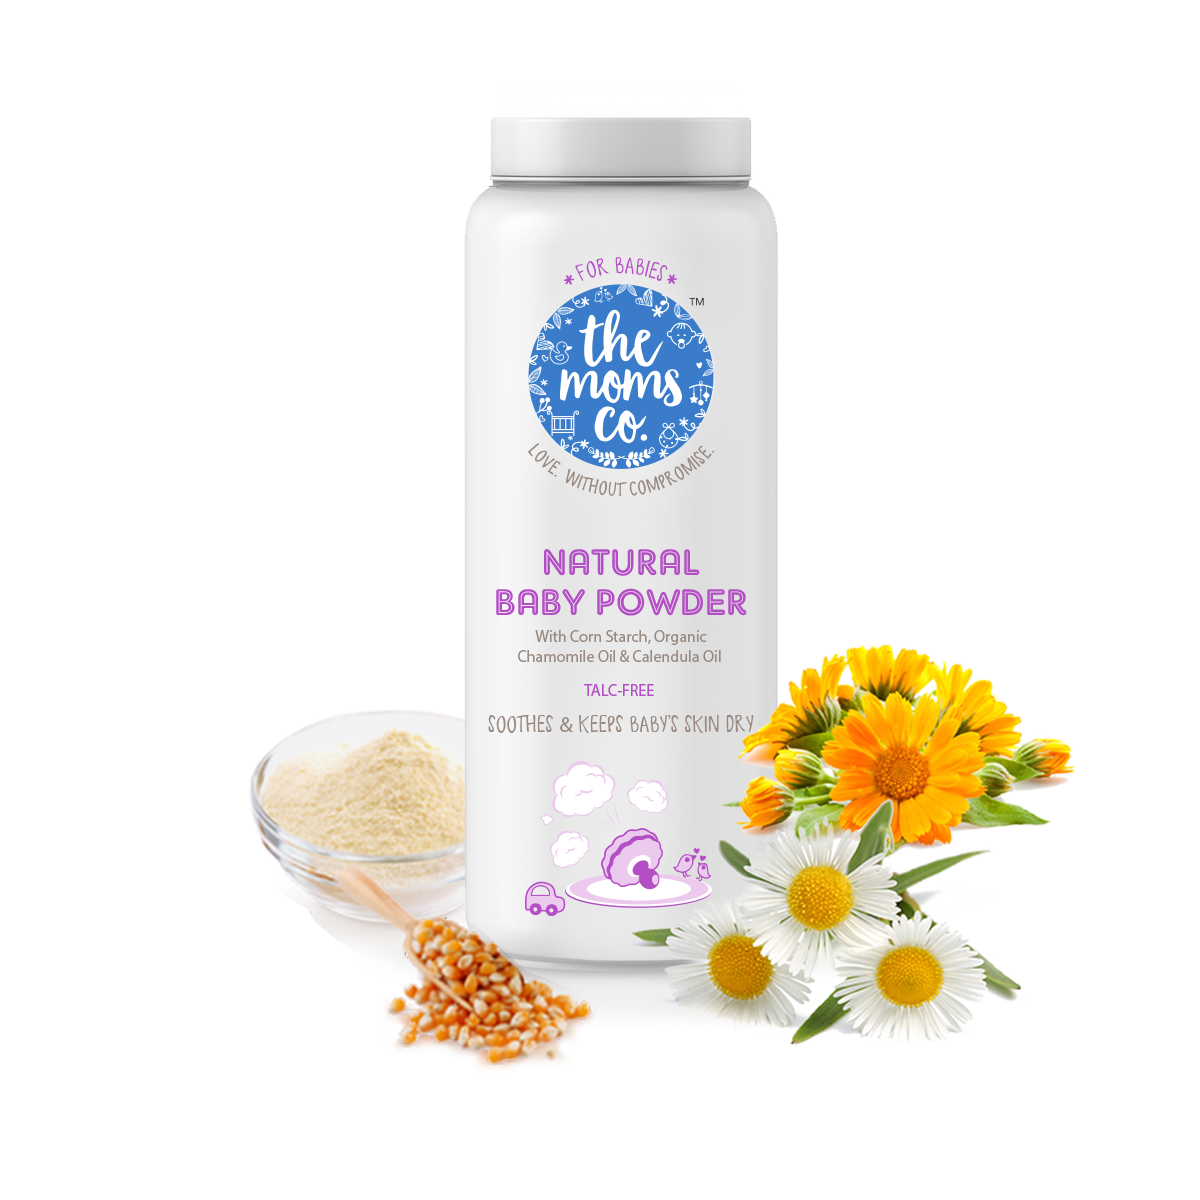 Diaper Care Bundle - includes Natural Baby Powder and Natural Diaper Rash Cream